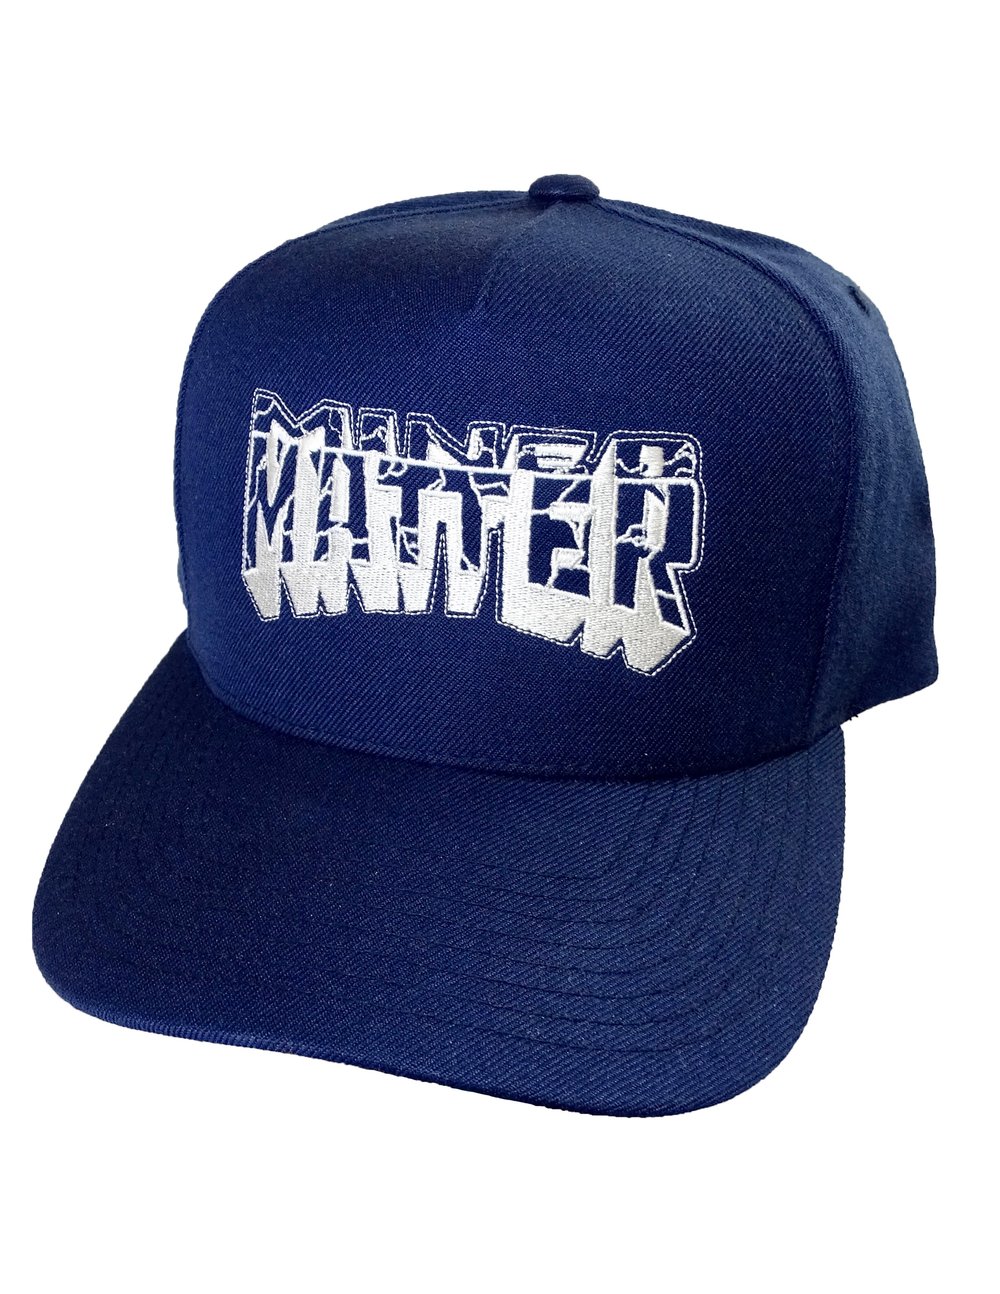 Mined Matter Stone Henge Embroidered Snapback Hat - Navy